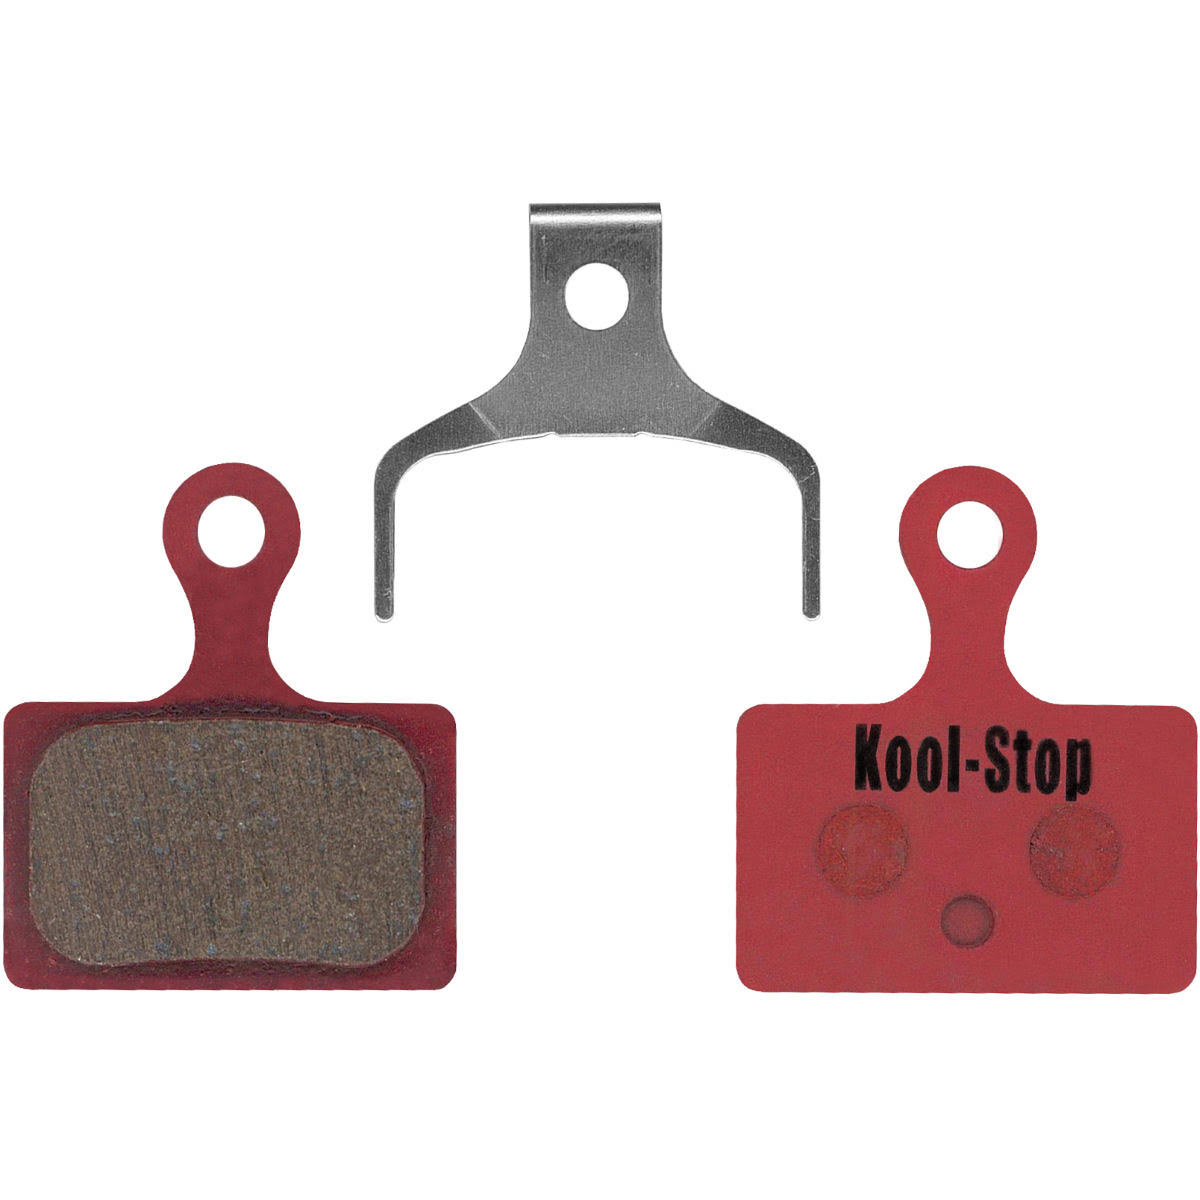 Kool-Stop Disc Brake Pads for Shimano - Organic Compound